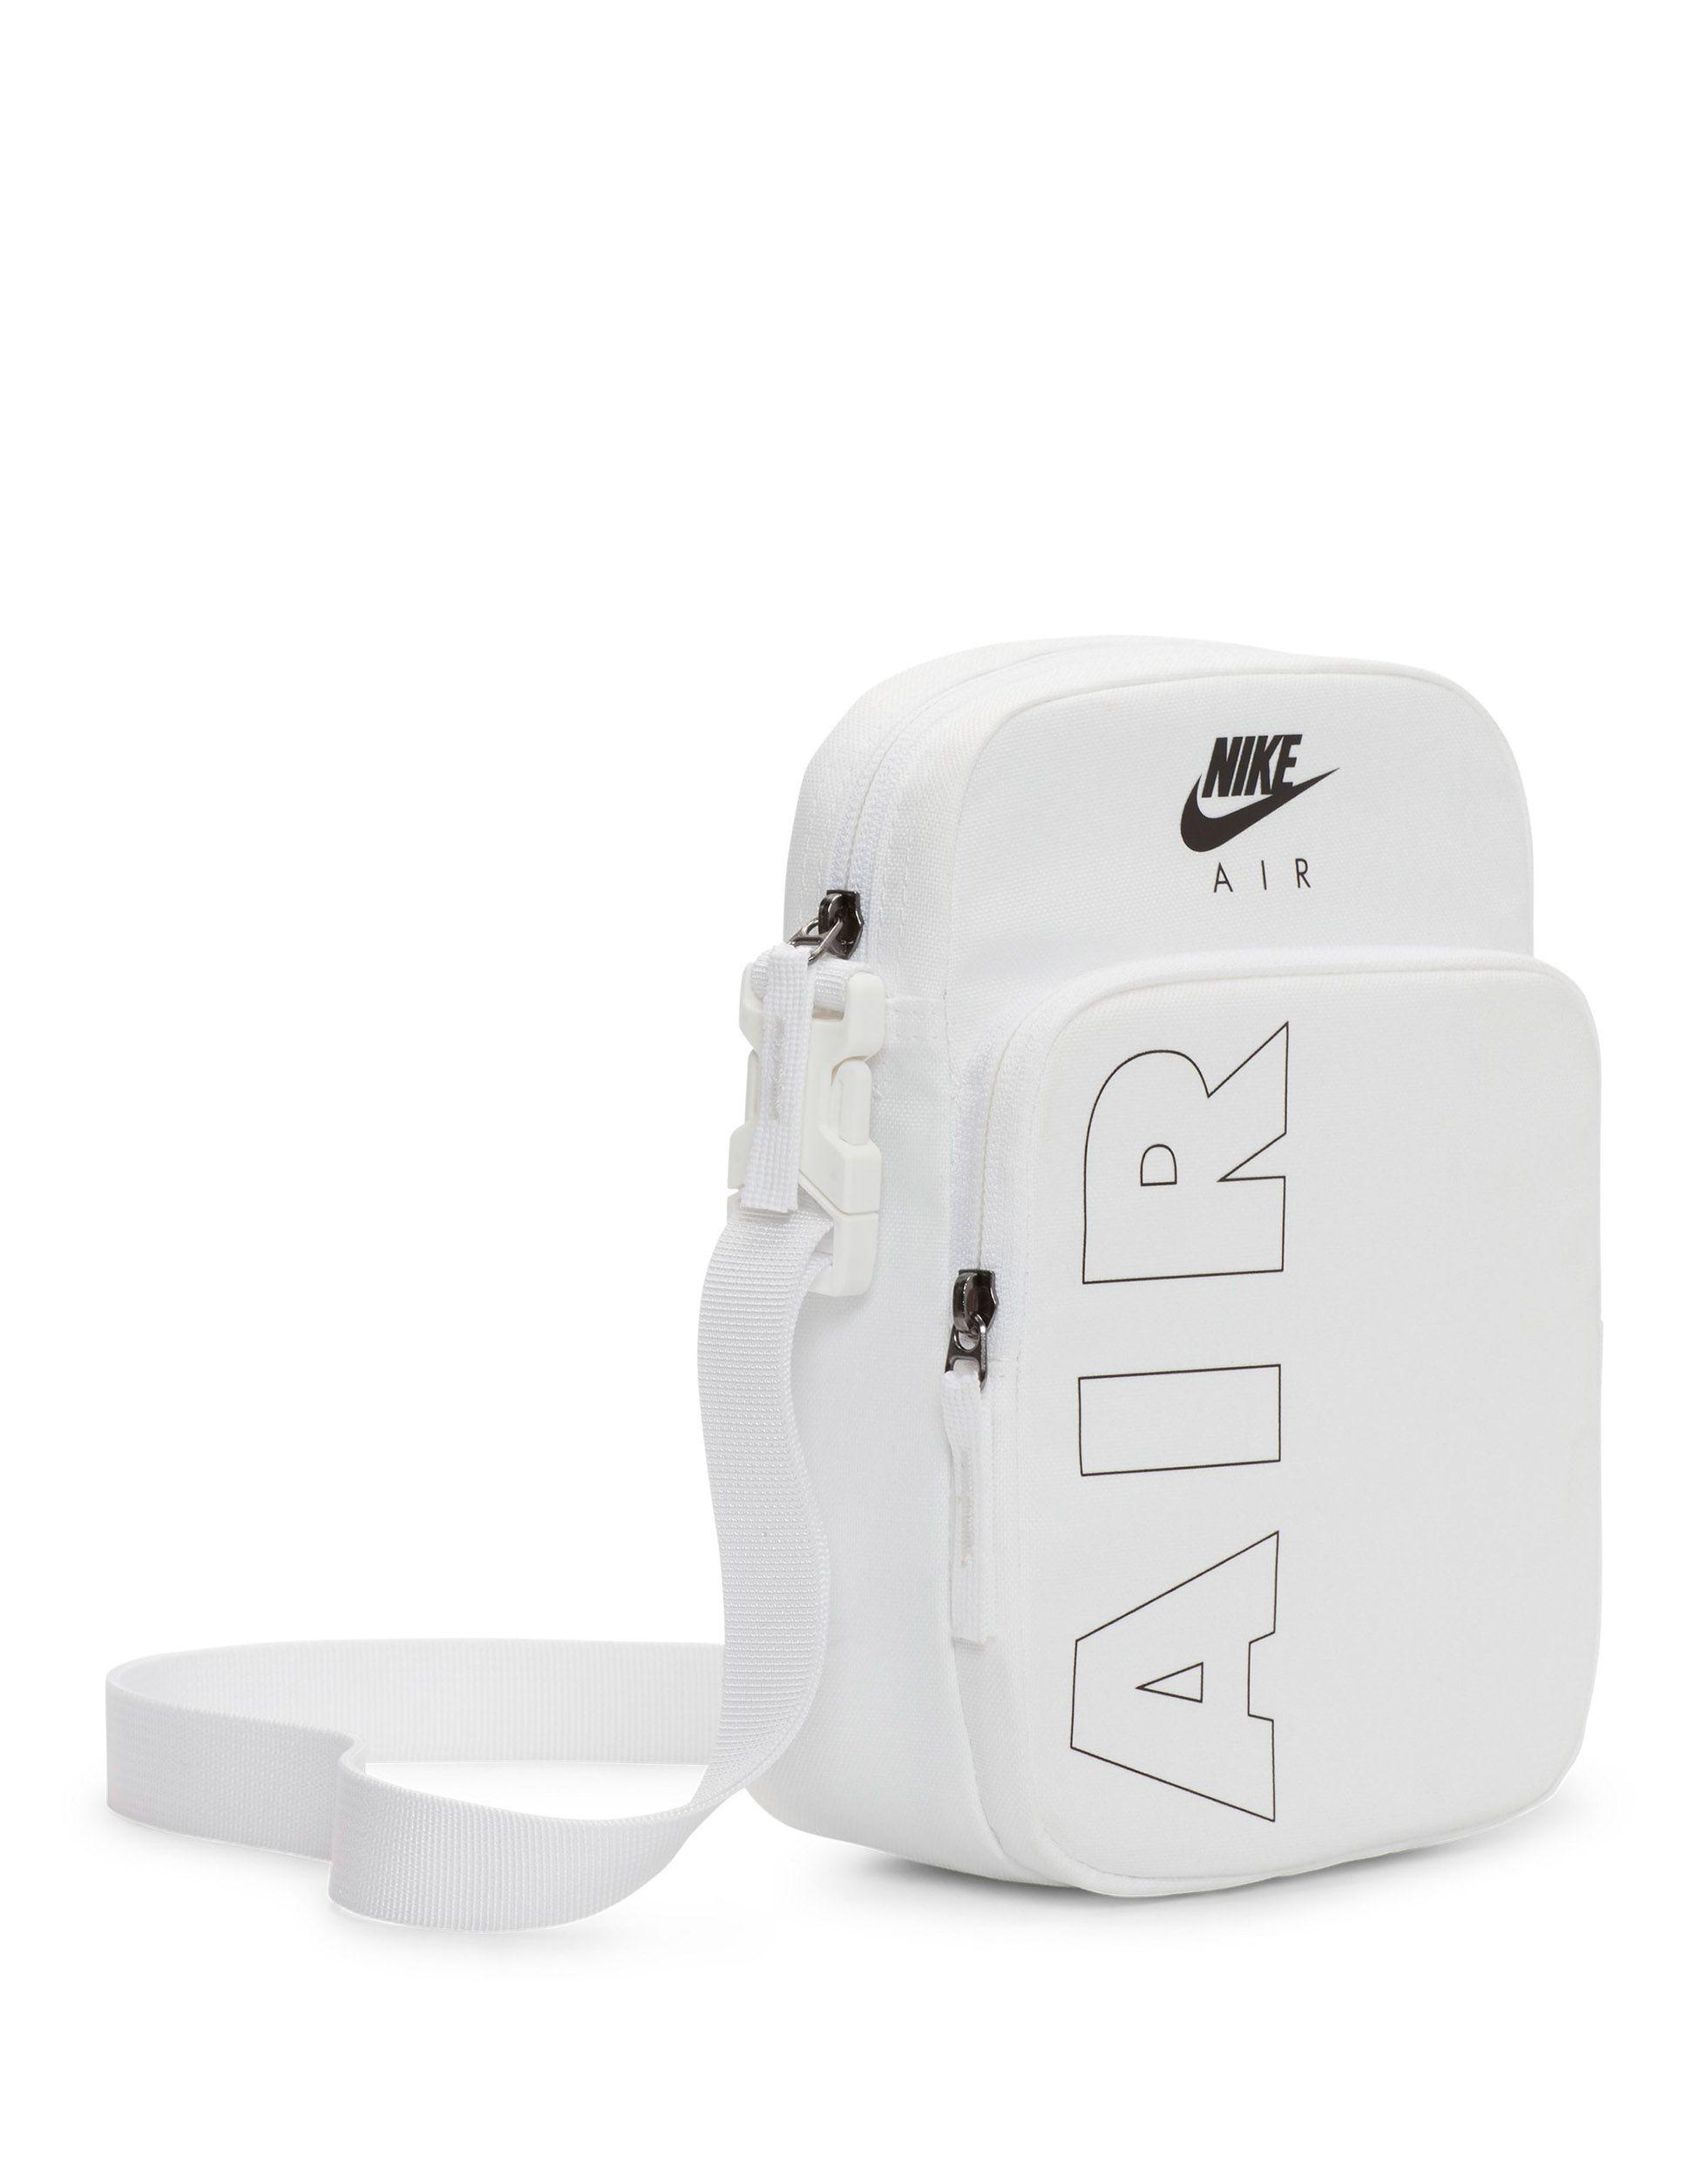 Nike Air Cross Body Bag in White - Lyst